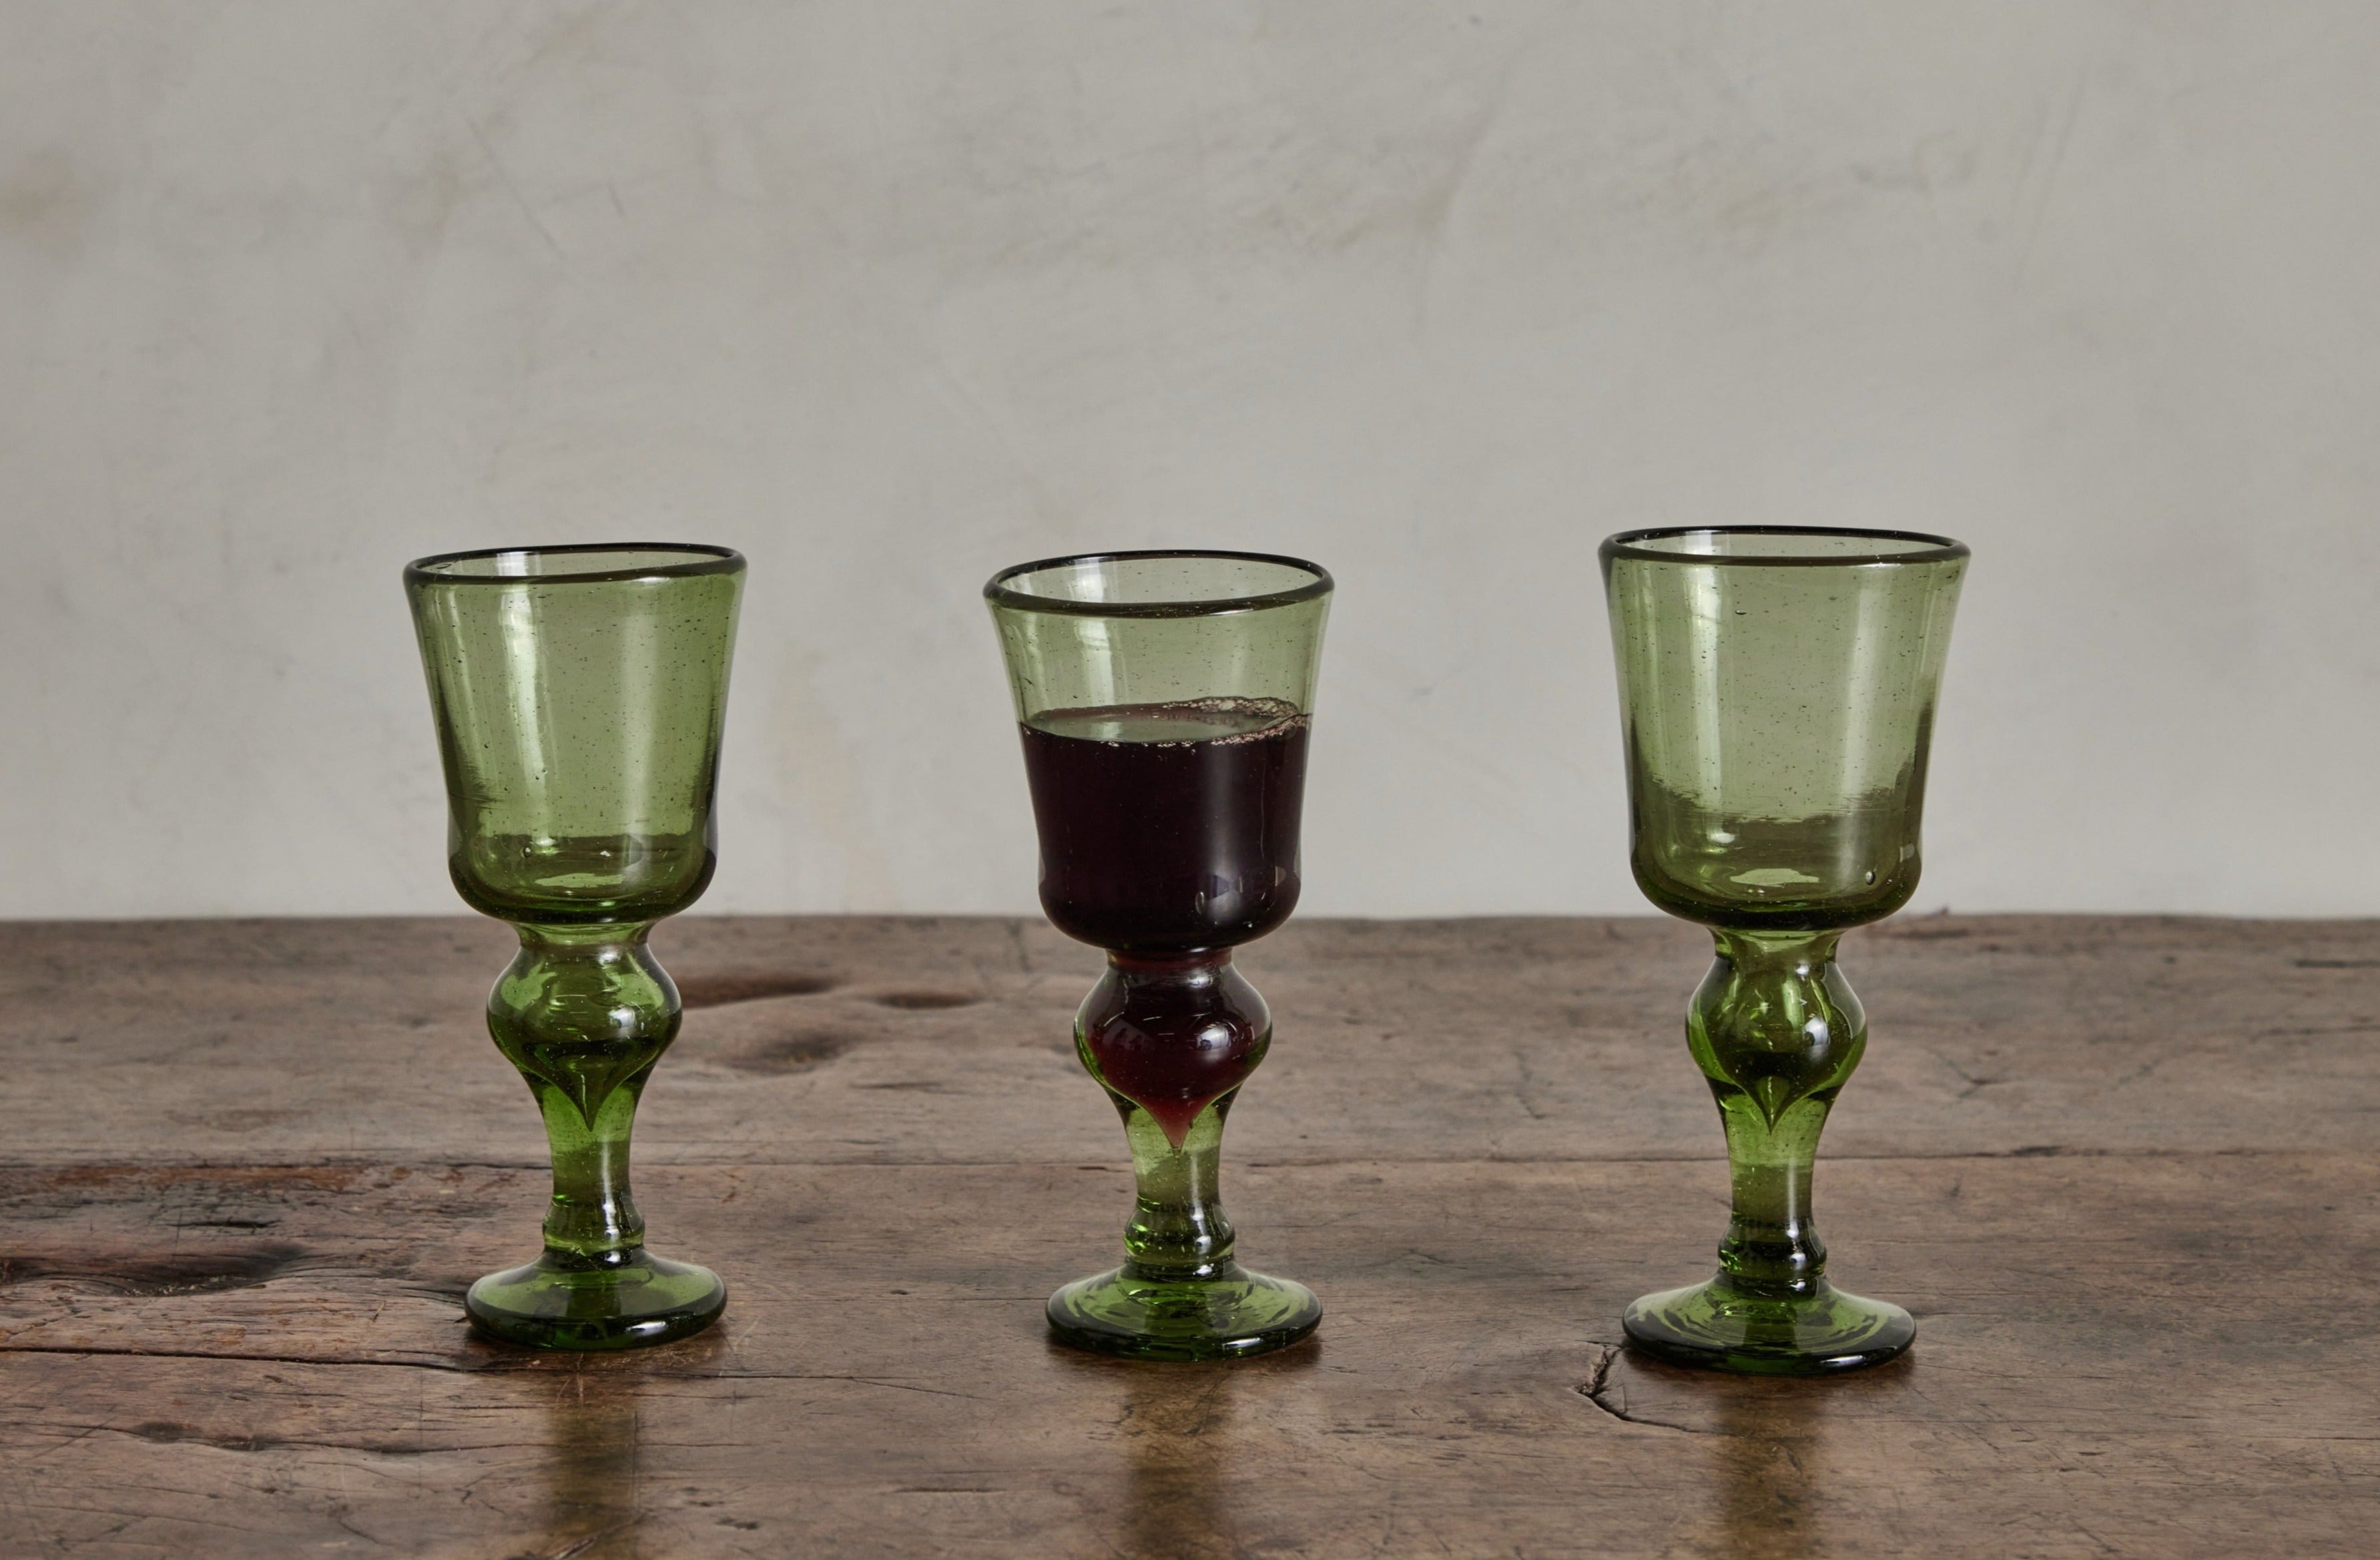 La Soufflerie White Wine Glass in Vert